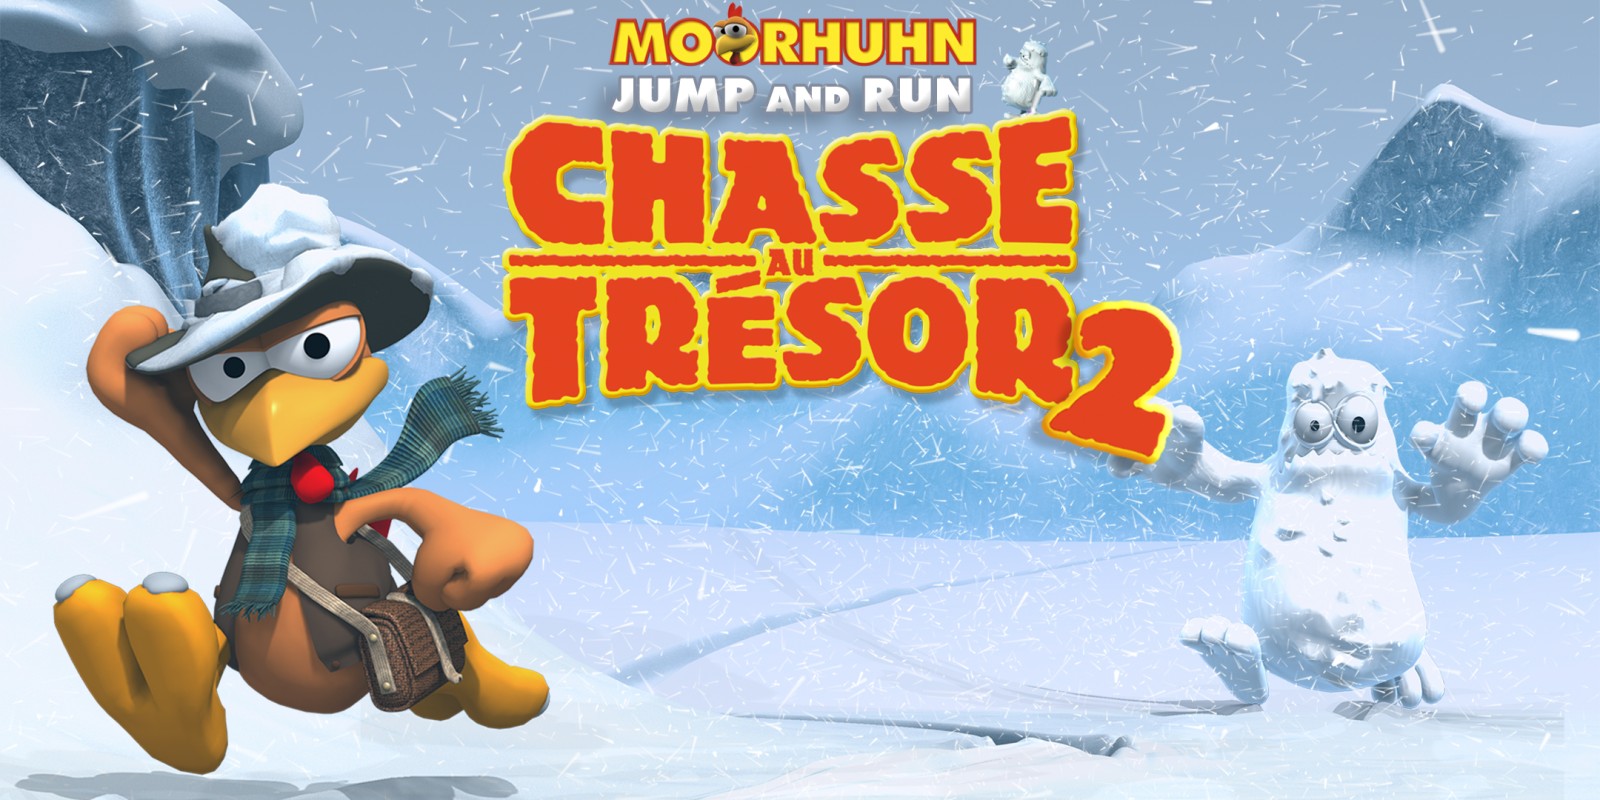 Moorhuhn Jump and Run 'Chasse au trésor 2'